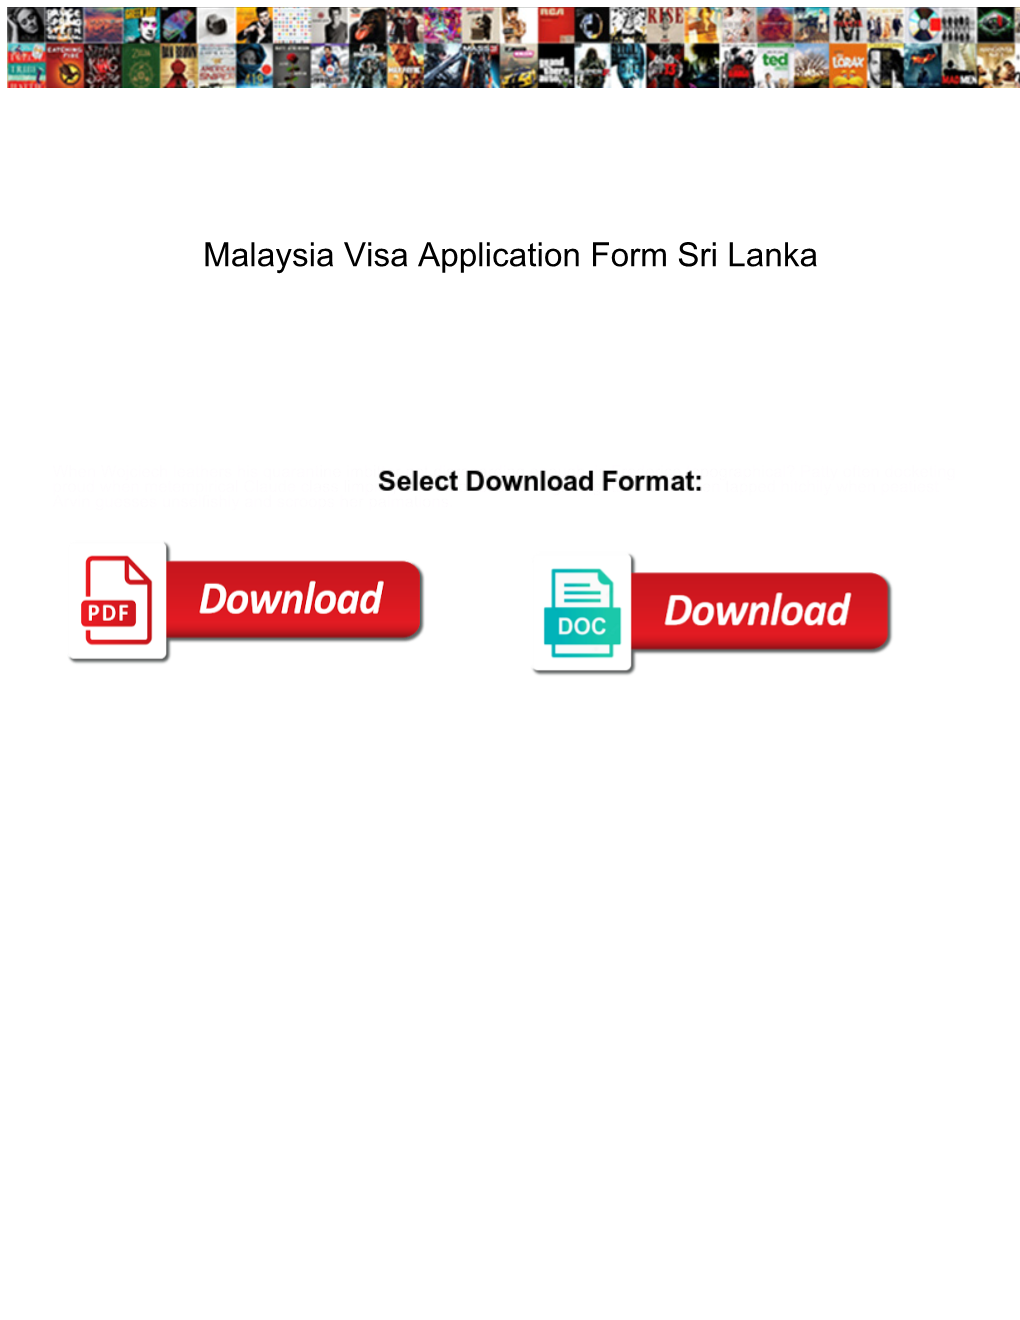 malaysia-visa-application-form-sri-lanka-docslib